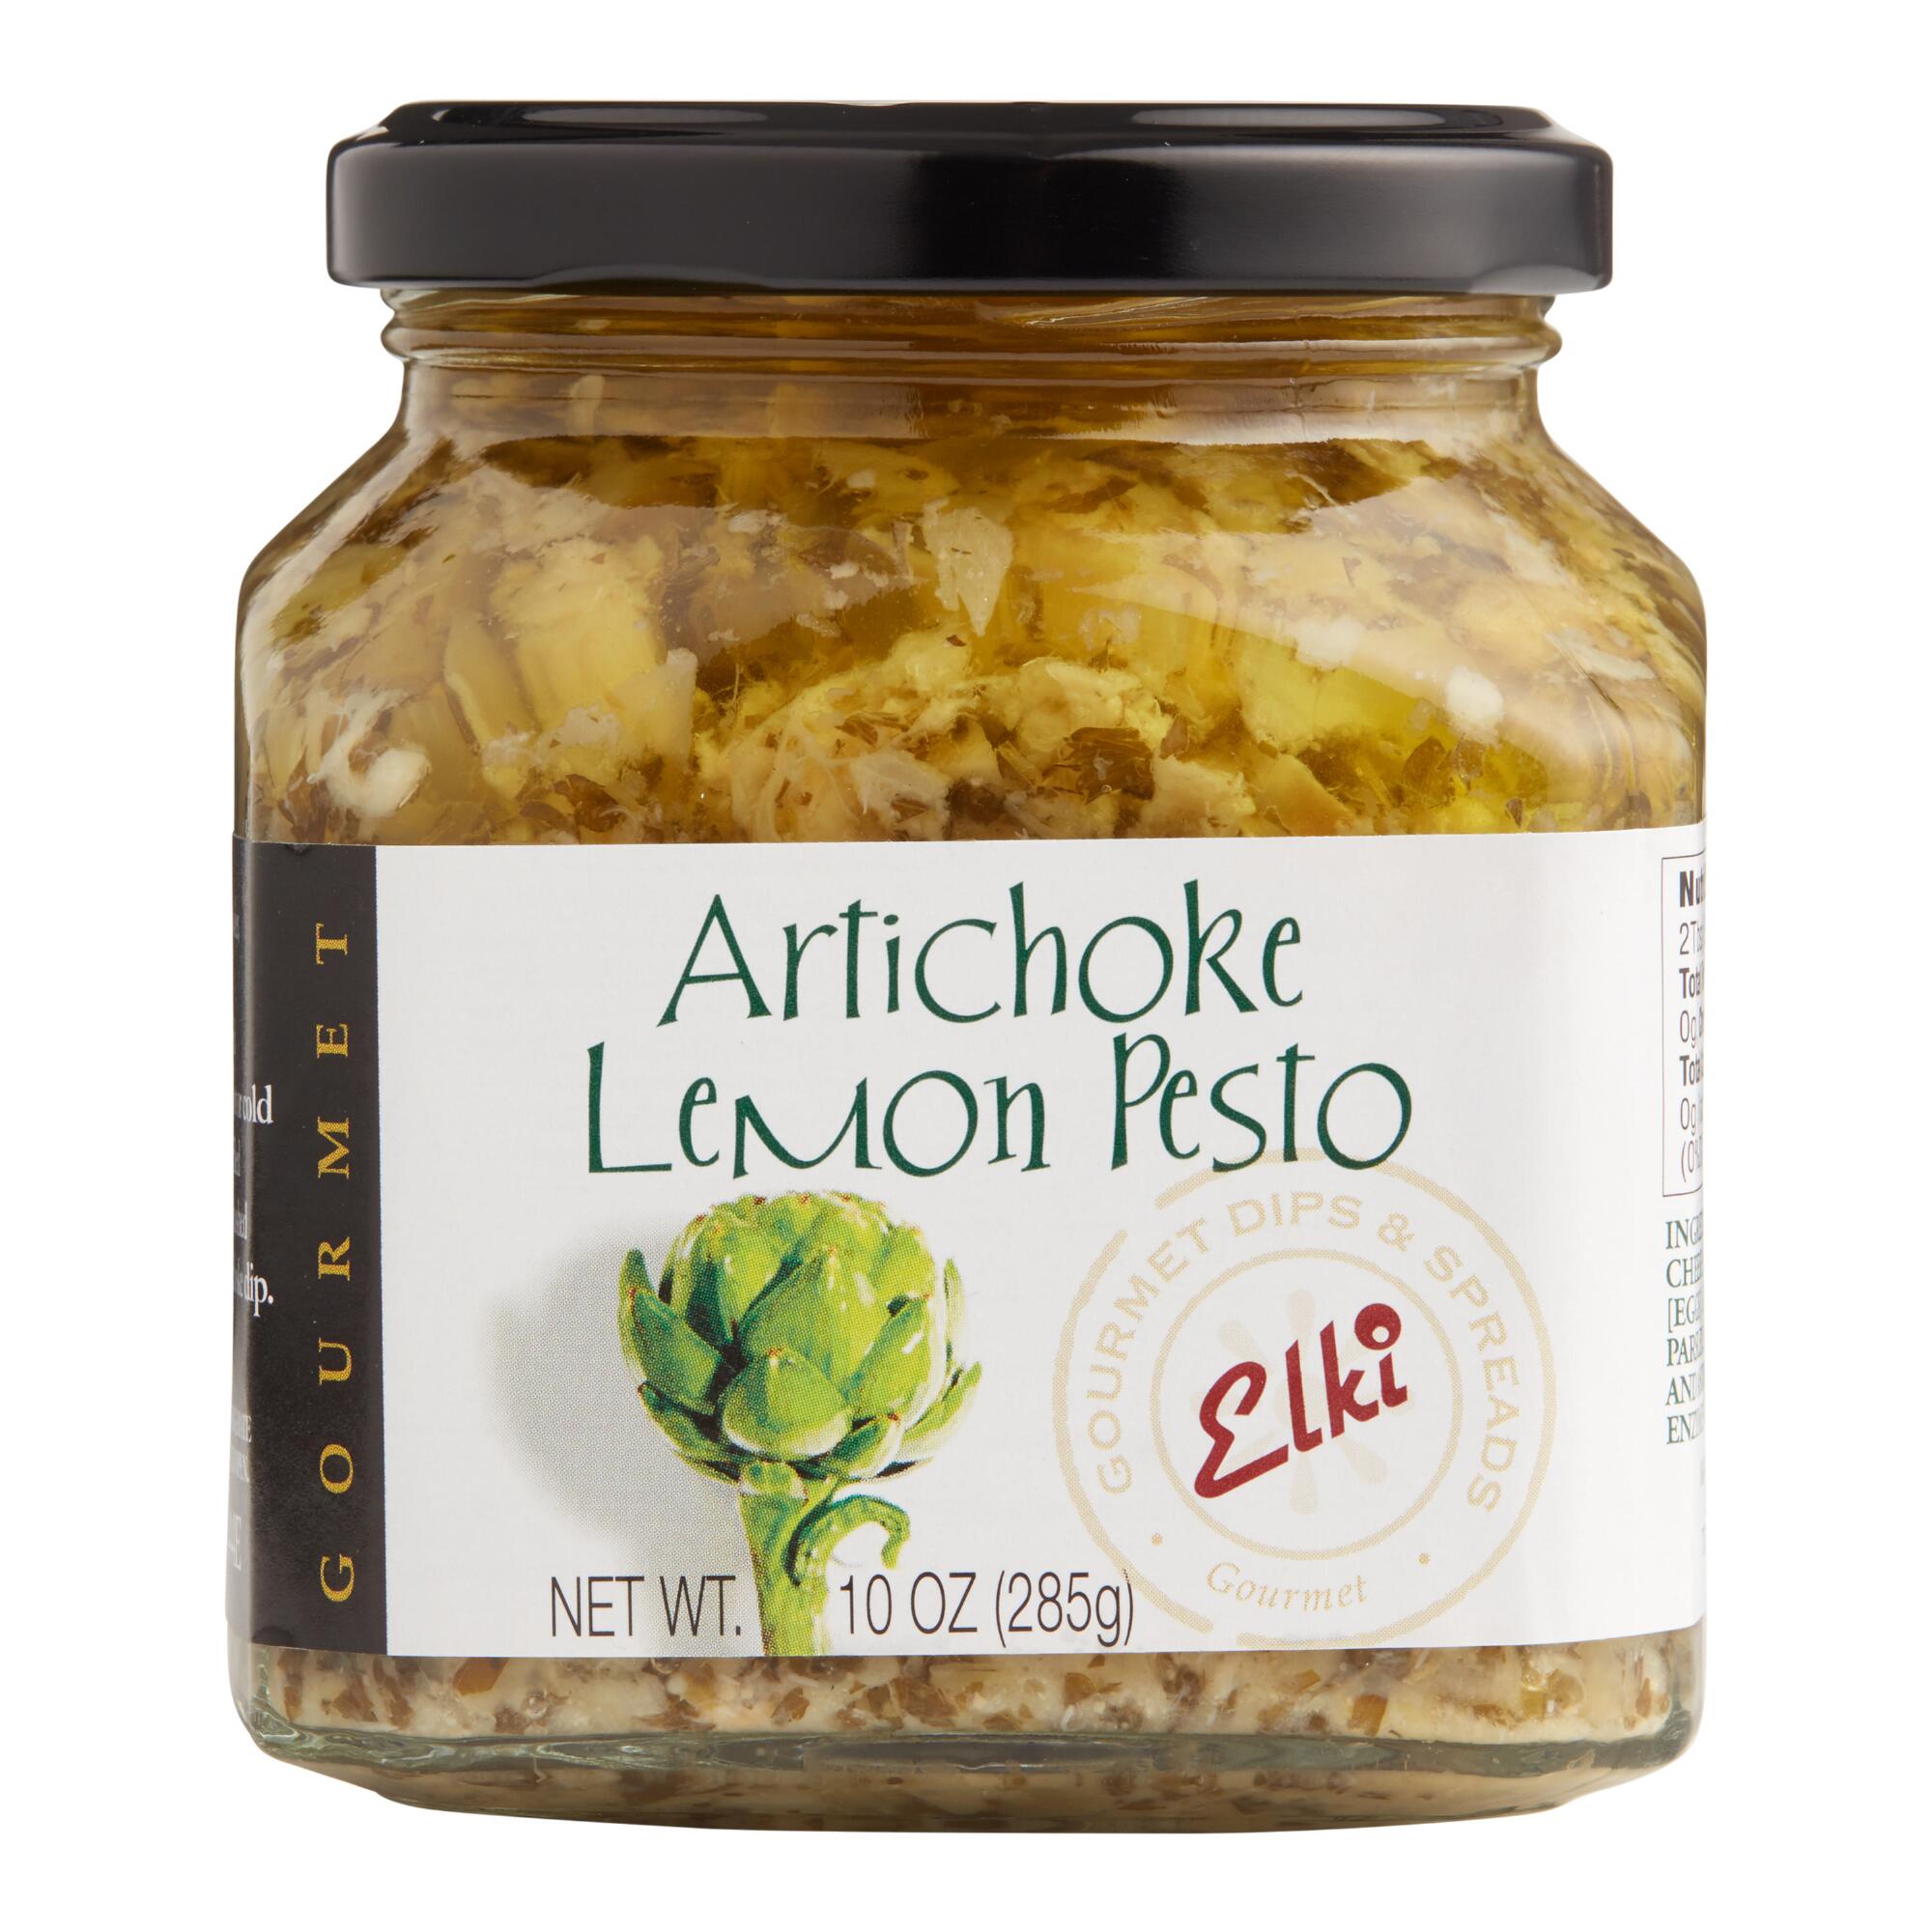 Elki Artichoke Lemon Pesto by World Market